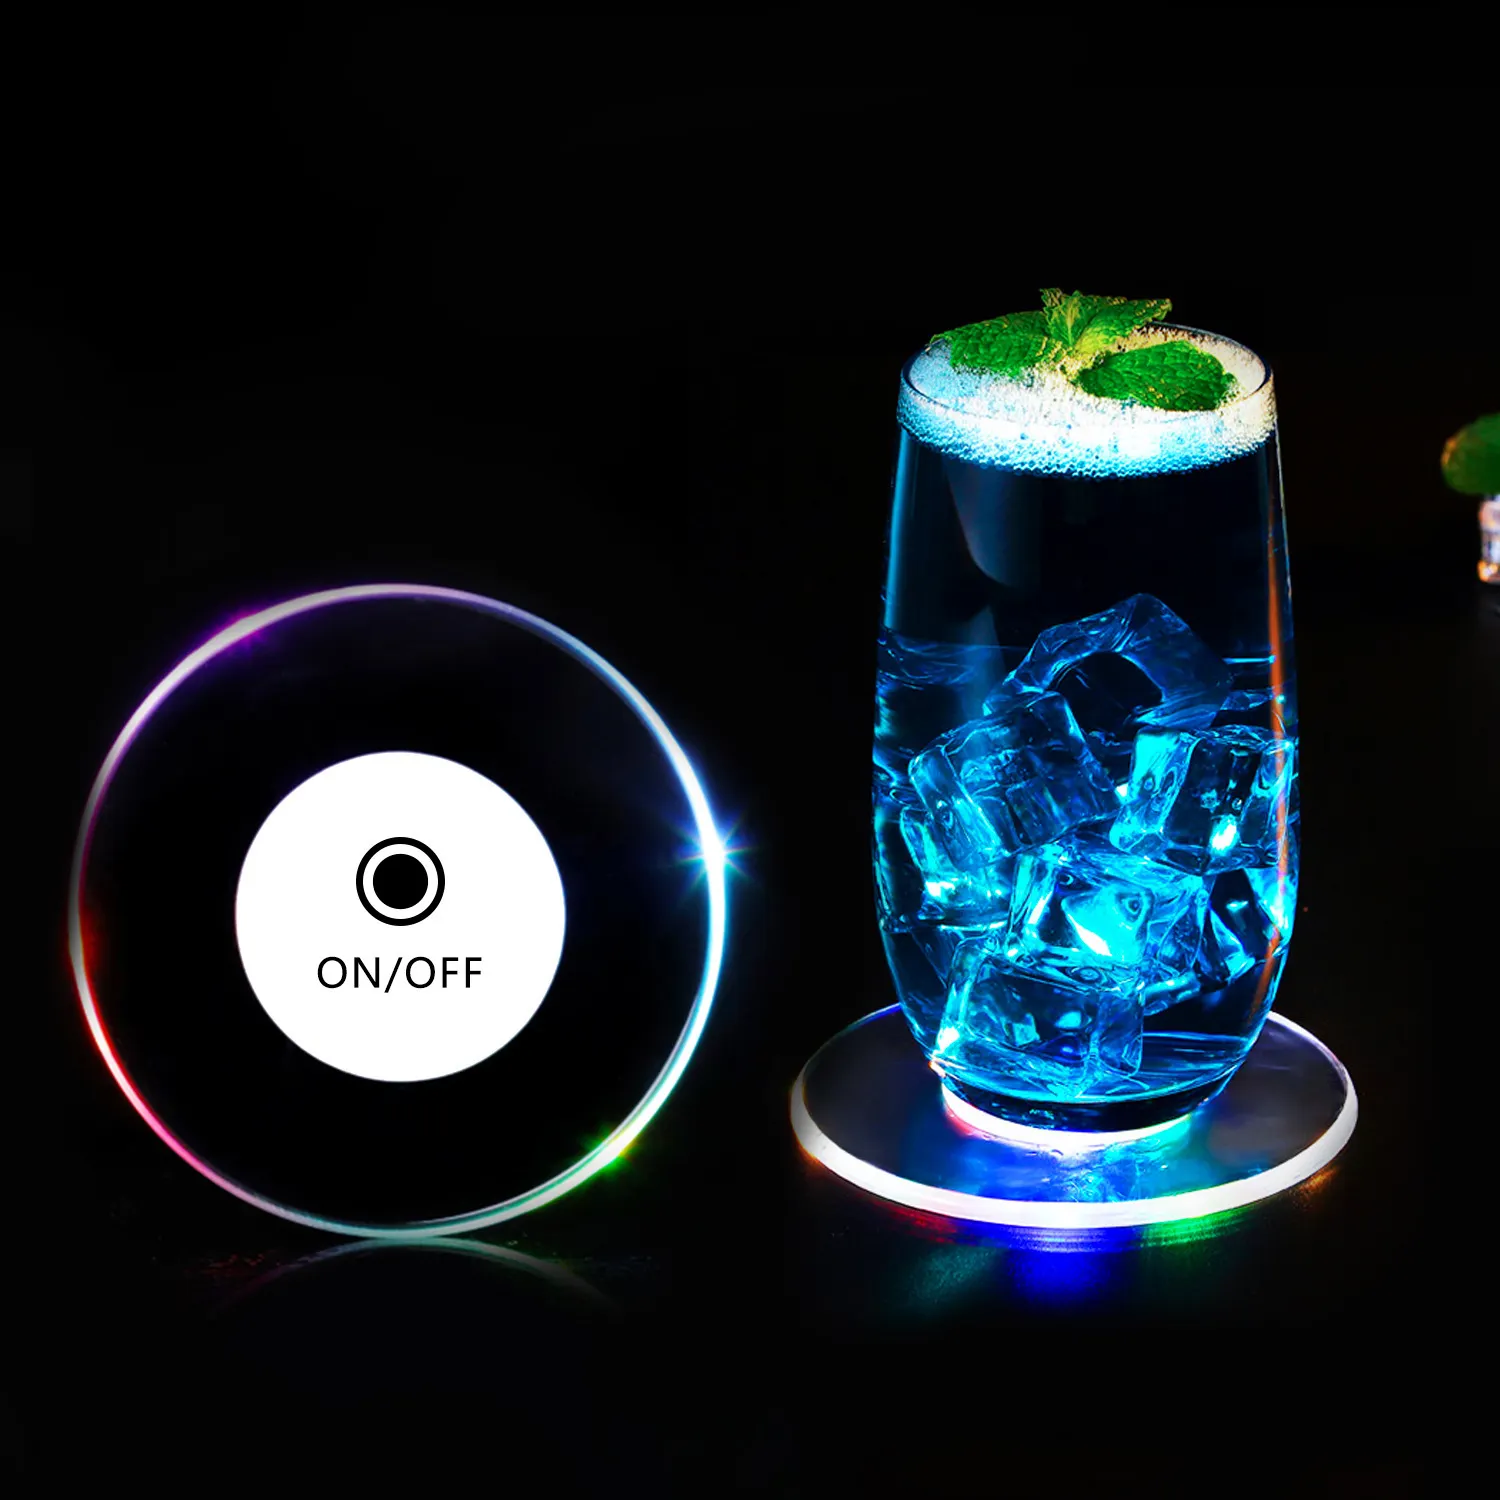 ZJI LED 컵 받침 라이트 업 컵 받침 LED 병 조명 RGB 다채로운 병 Glorifier LED 스티커 컵 받침 디스크 라이트 업